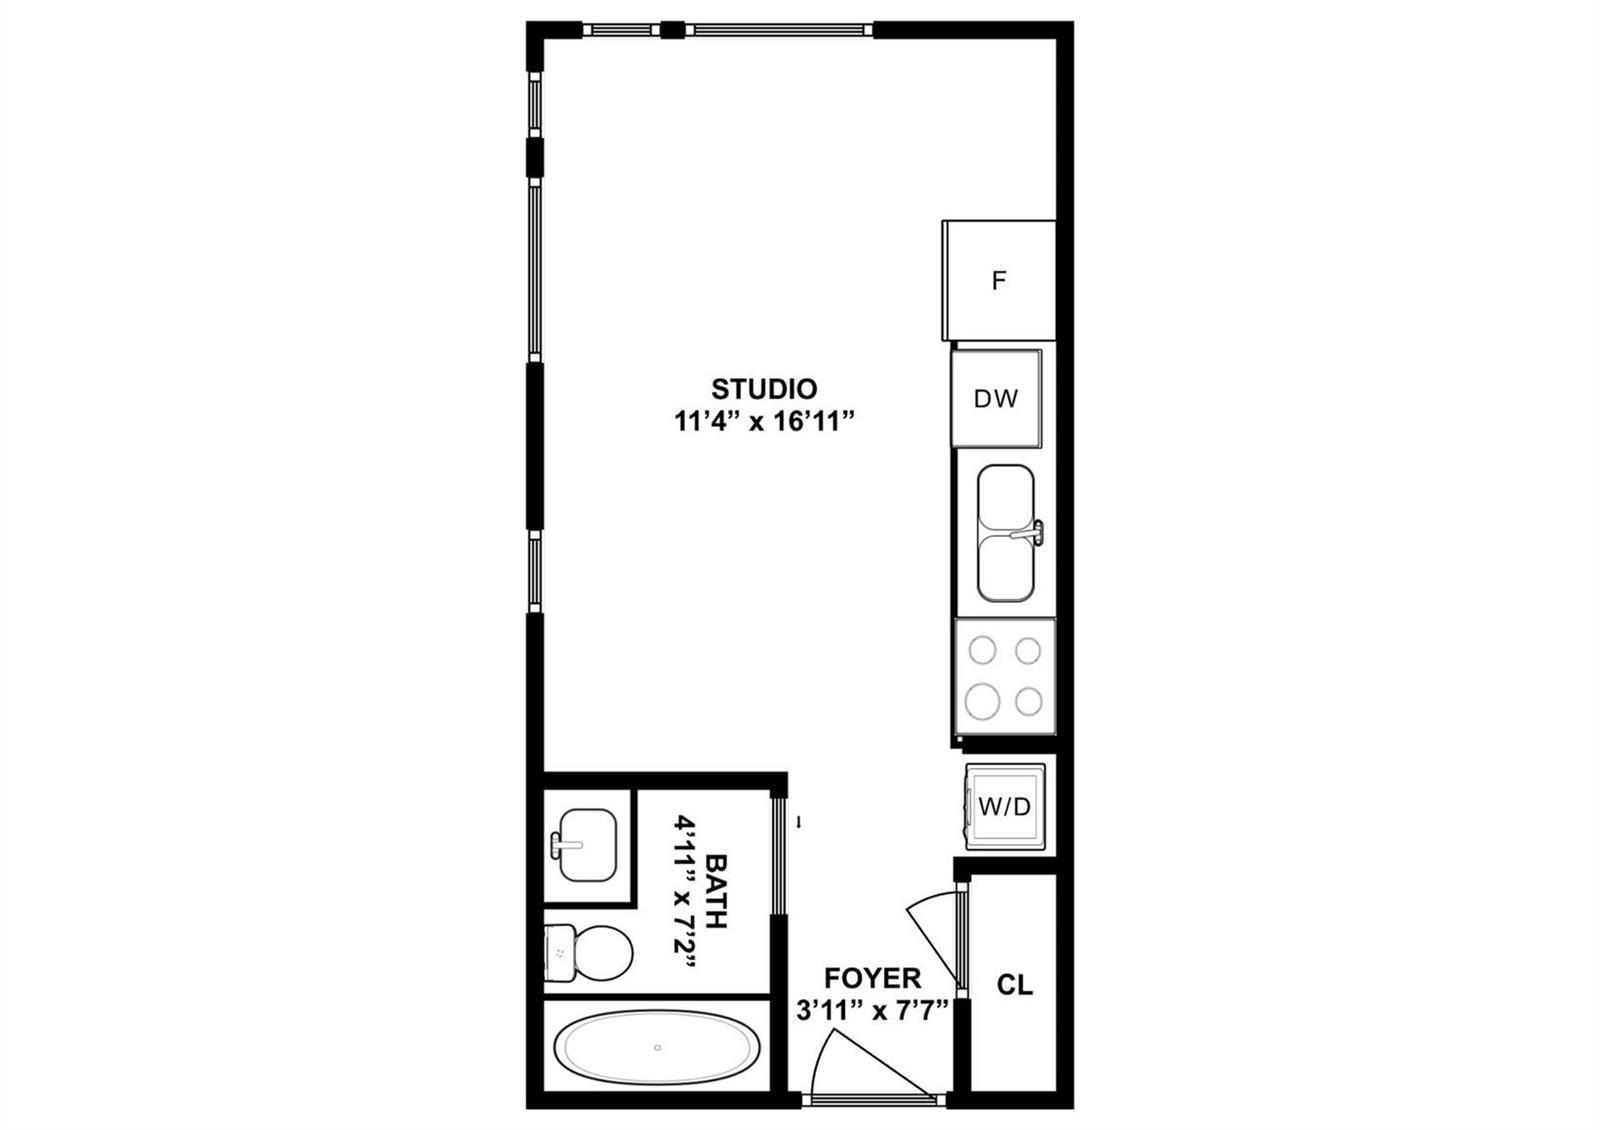 Full Floor Plans of Unit 323 Cambridge House